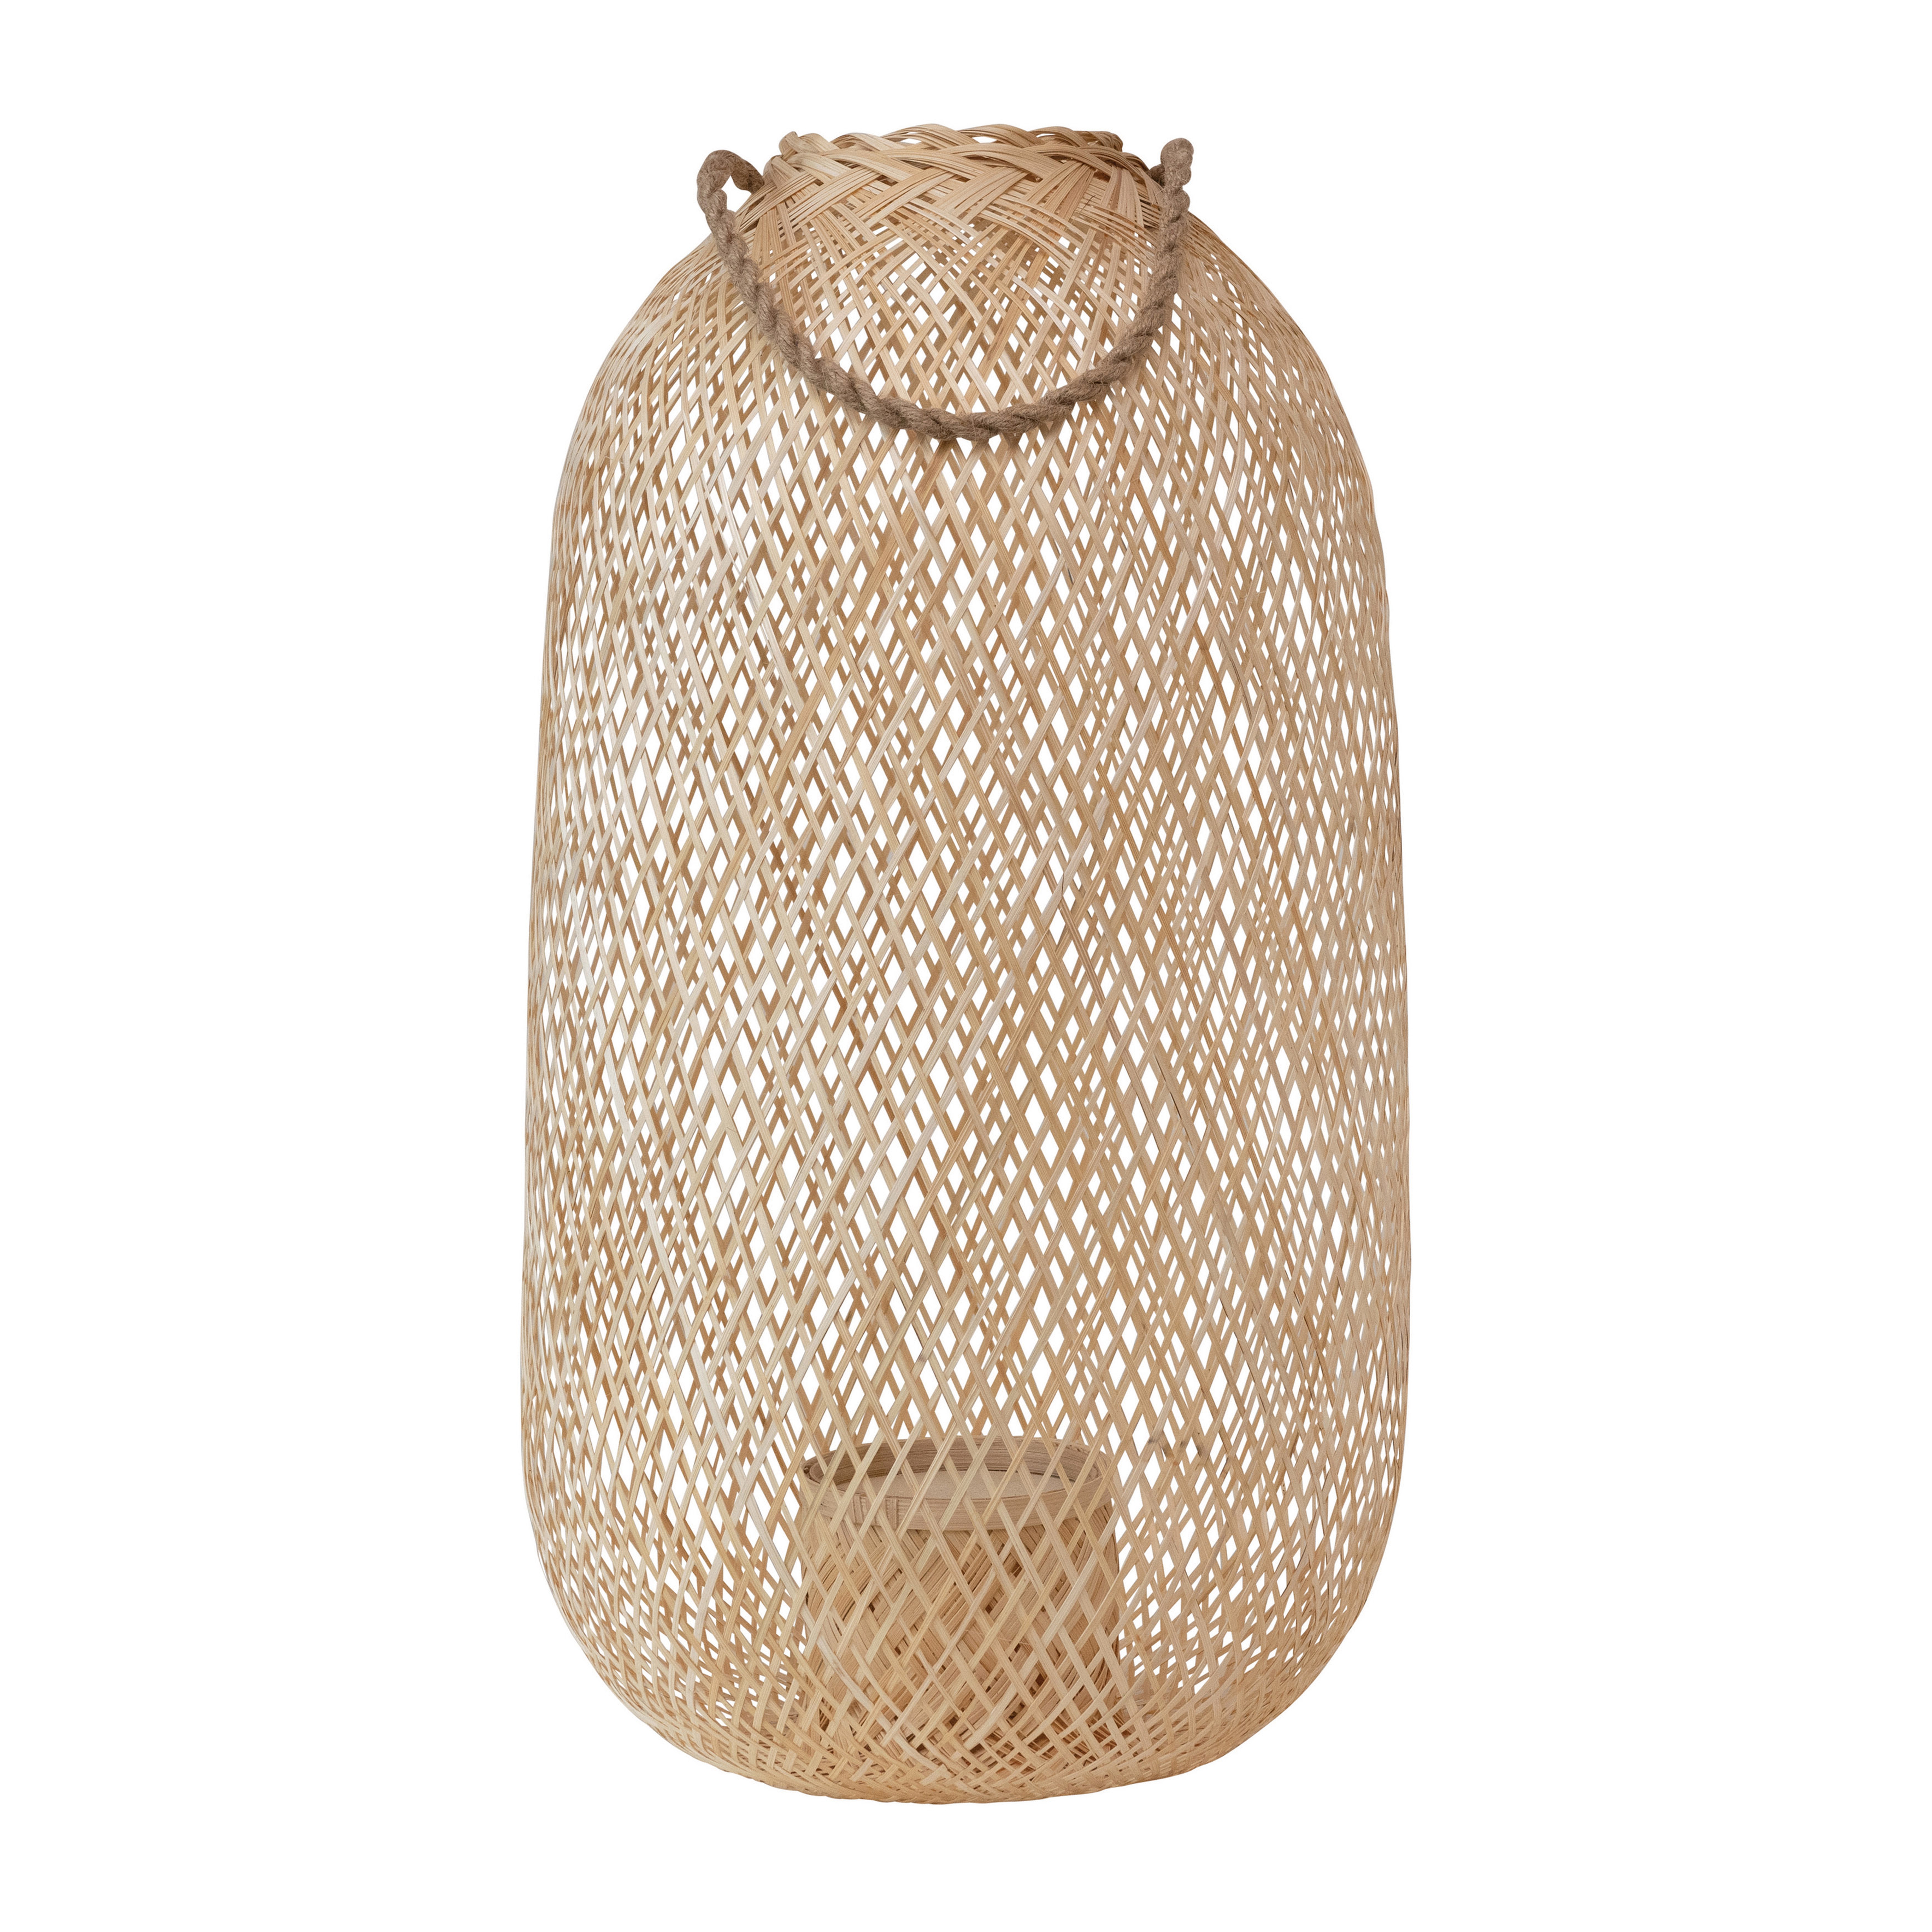 Hand-Woven Bamboo Lantern with Jute Handle & Glass Insert, Natural - Moss & Wilder